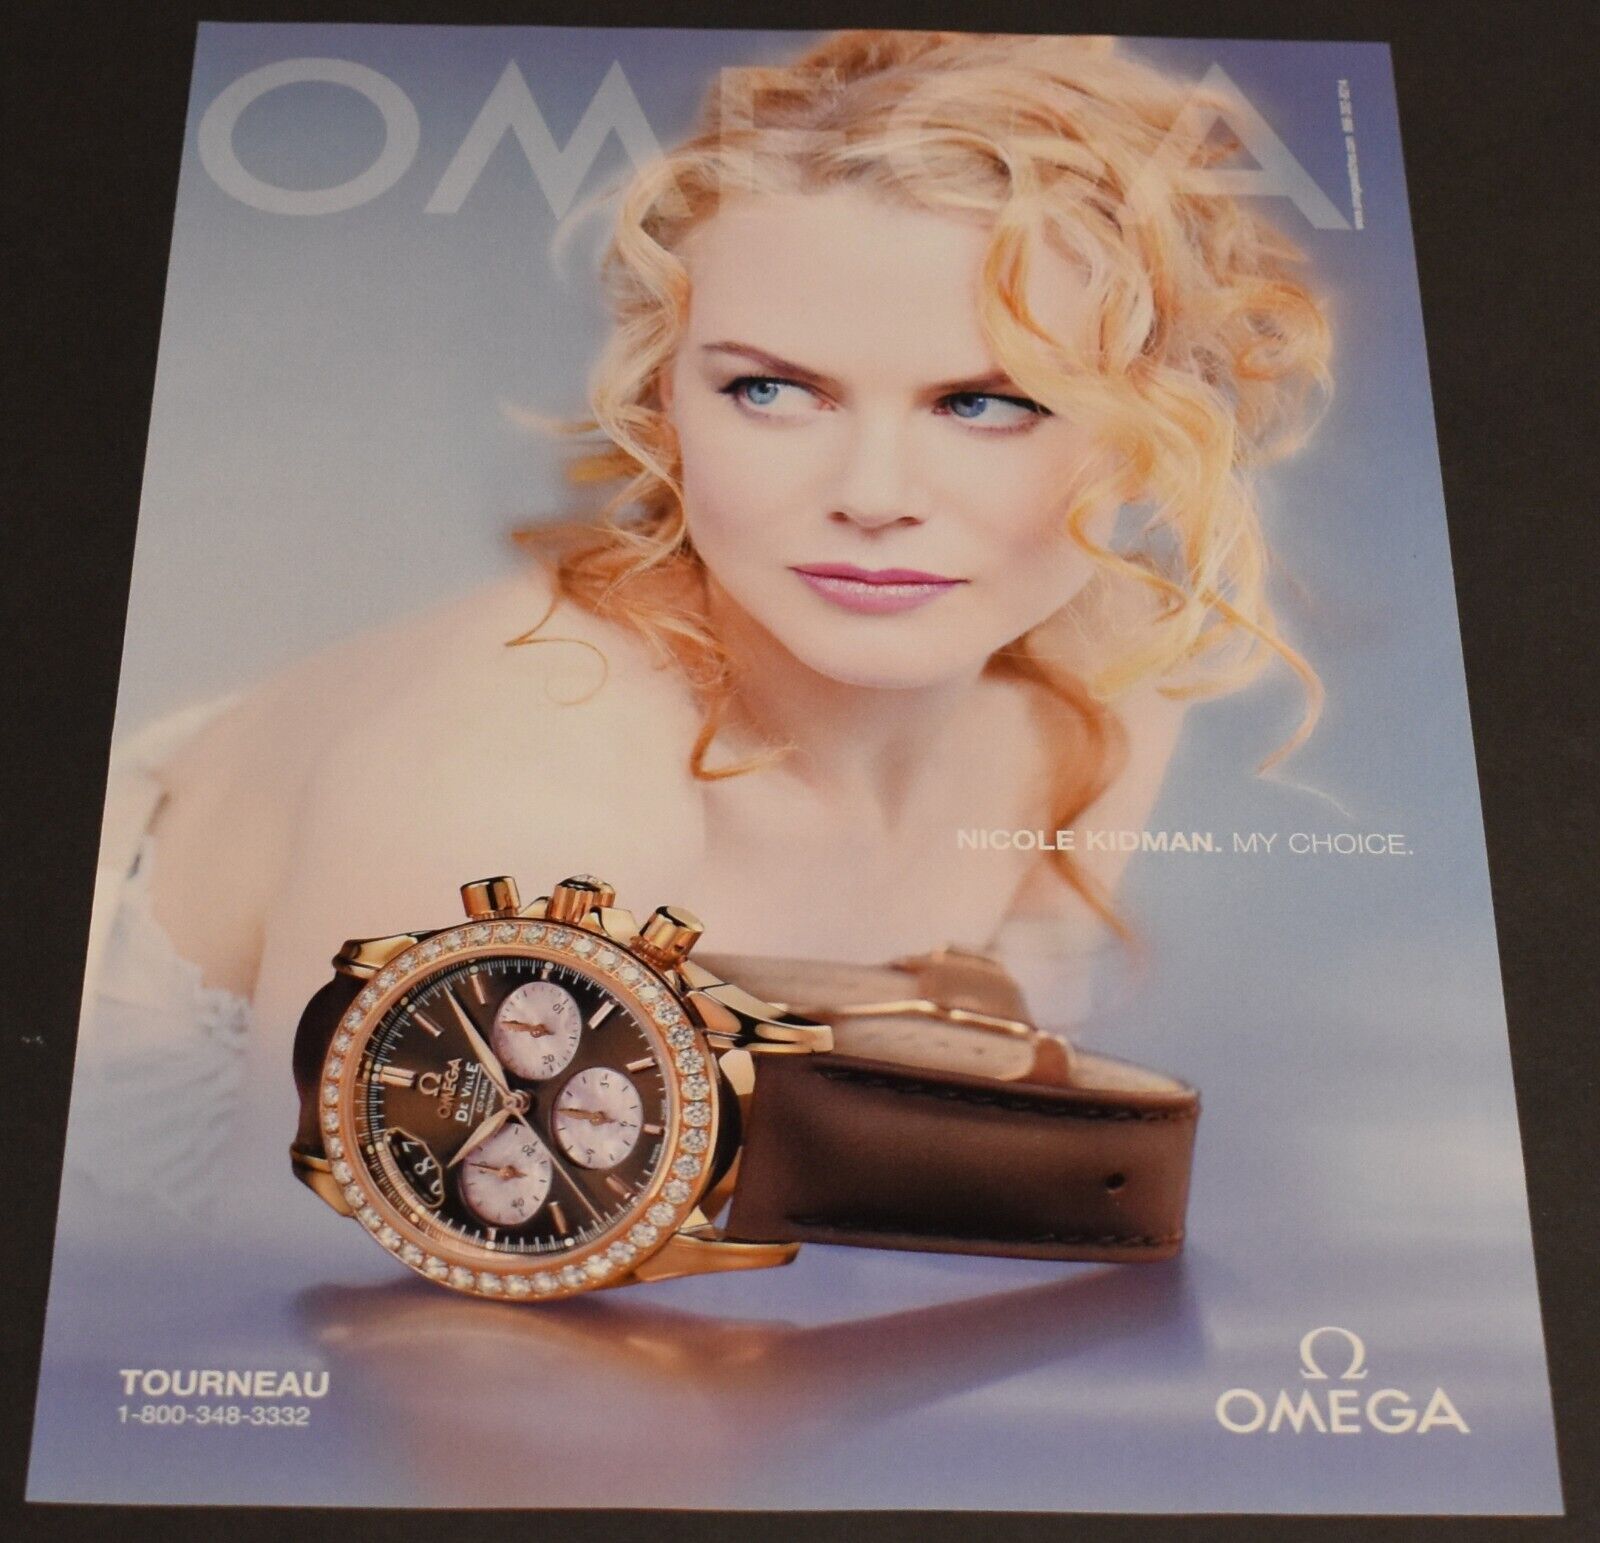 2007 Print Ad Nicole Kidman Omega My Choice Tourneau Watch Blonde Fashion art